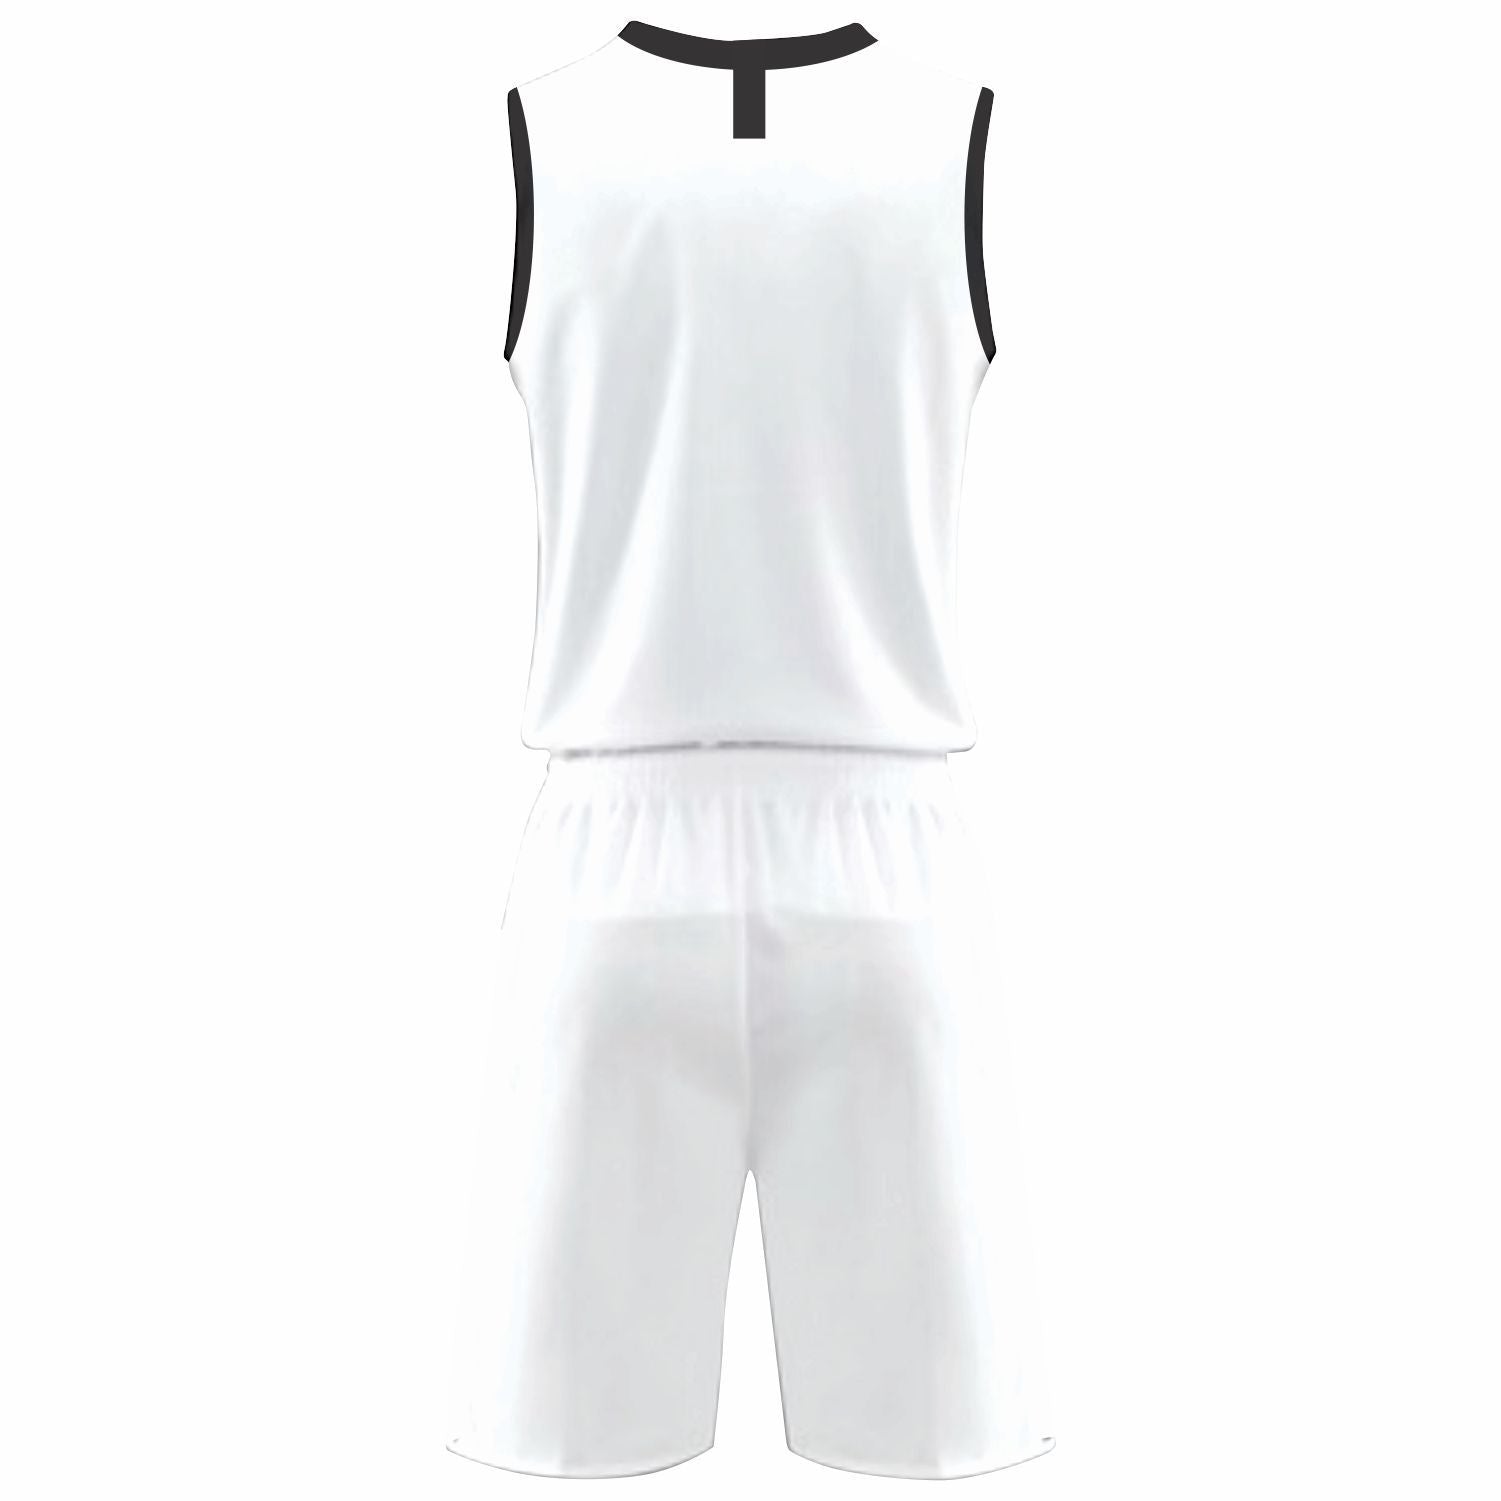 Spurs 2.0 NS Youth Basketball Uniform with Customization Option, Royal